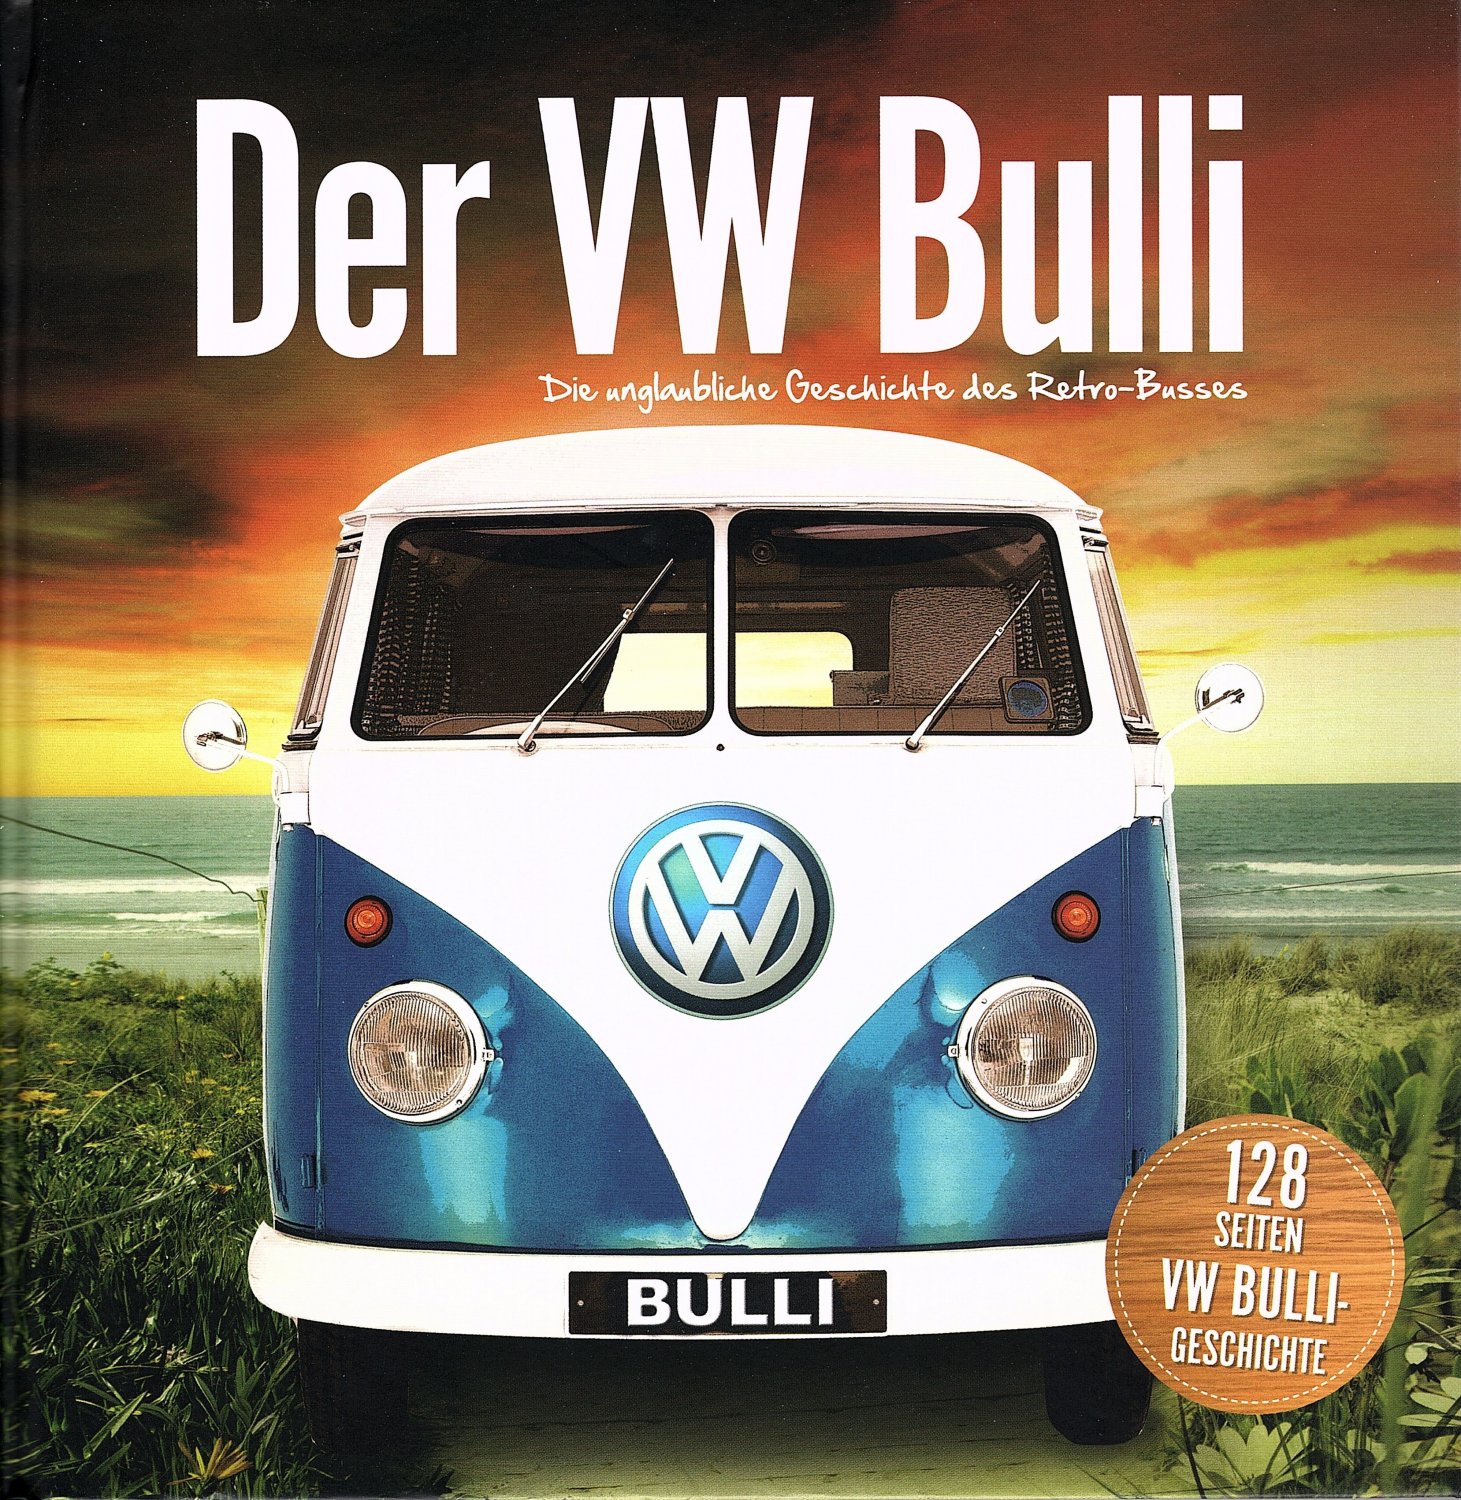 https://images.booklooker.de/x/9781786703552/Der-VW-Bulli-Die-unglaubliche-Geschichte-des-Retro-Busses-T1-T2-T3.jpg